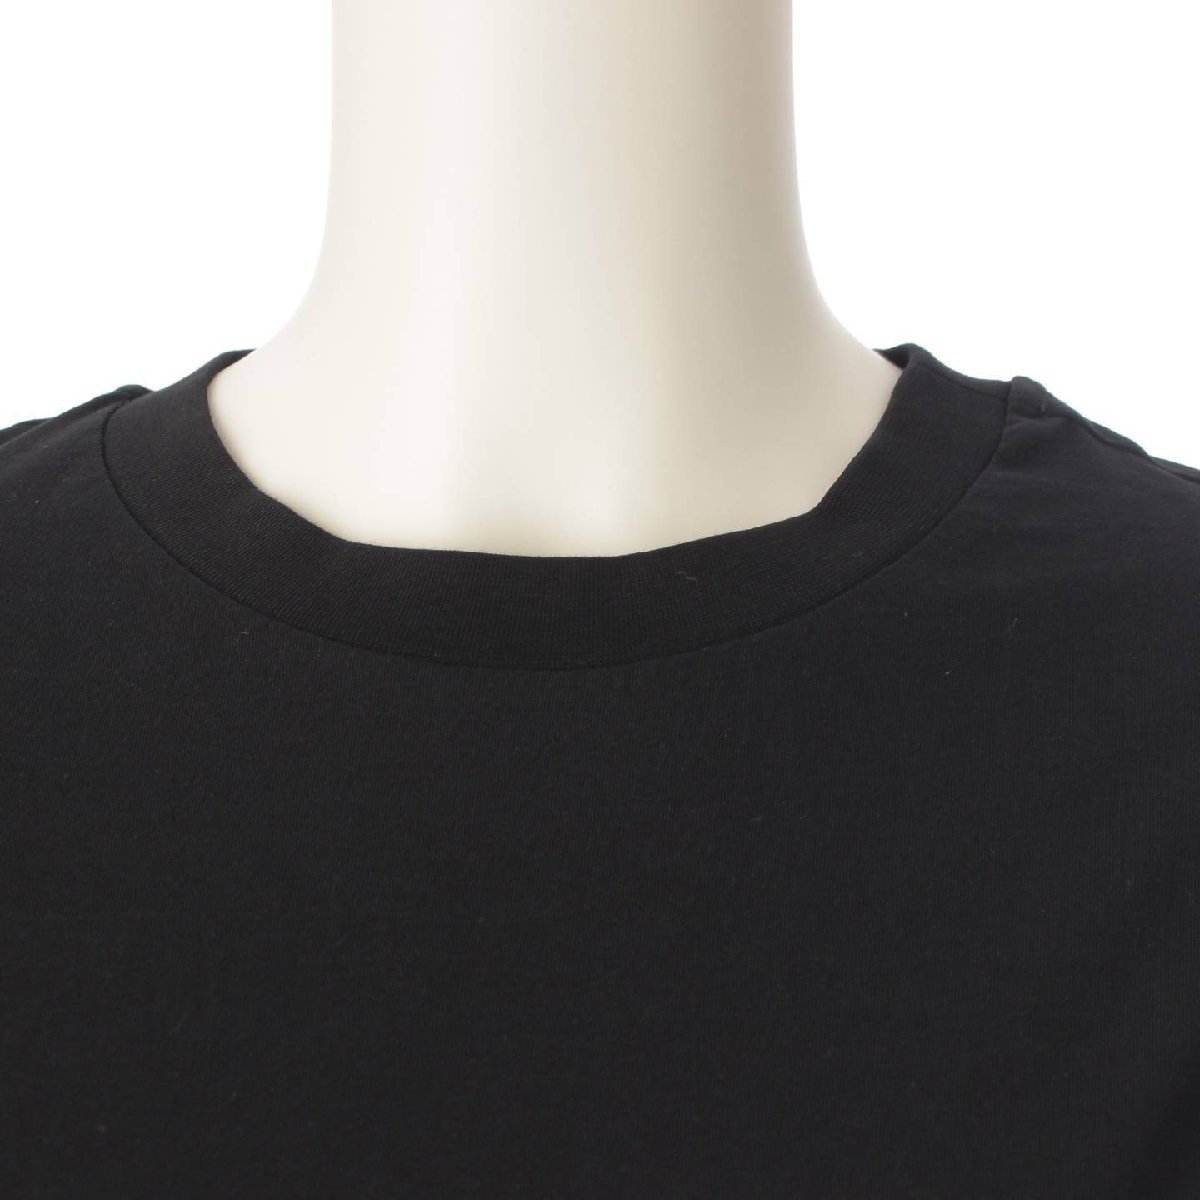 [ Loewe ]Loewebotanikaru принт трикотаж с коротким рукавом футболка унисекс S6199450CR черный M [ б/у ]188227